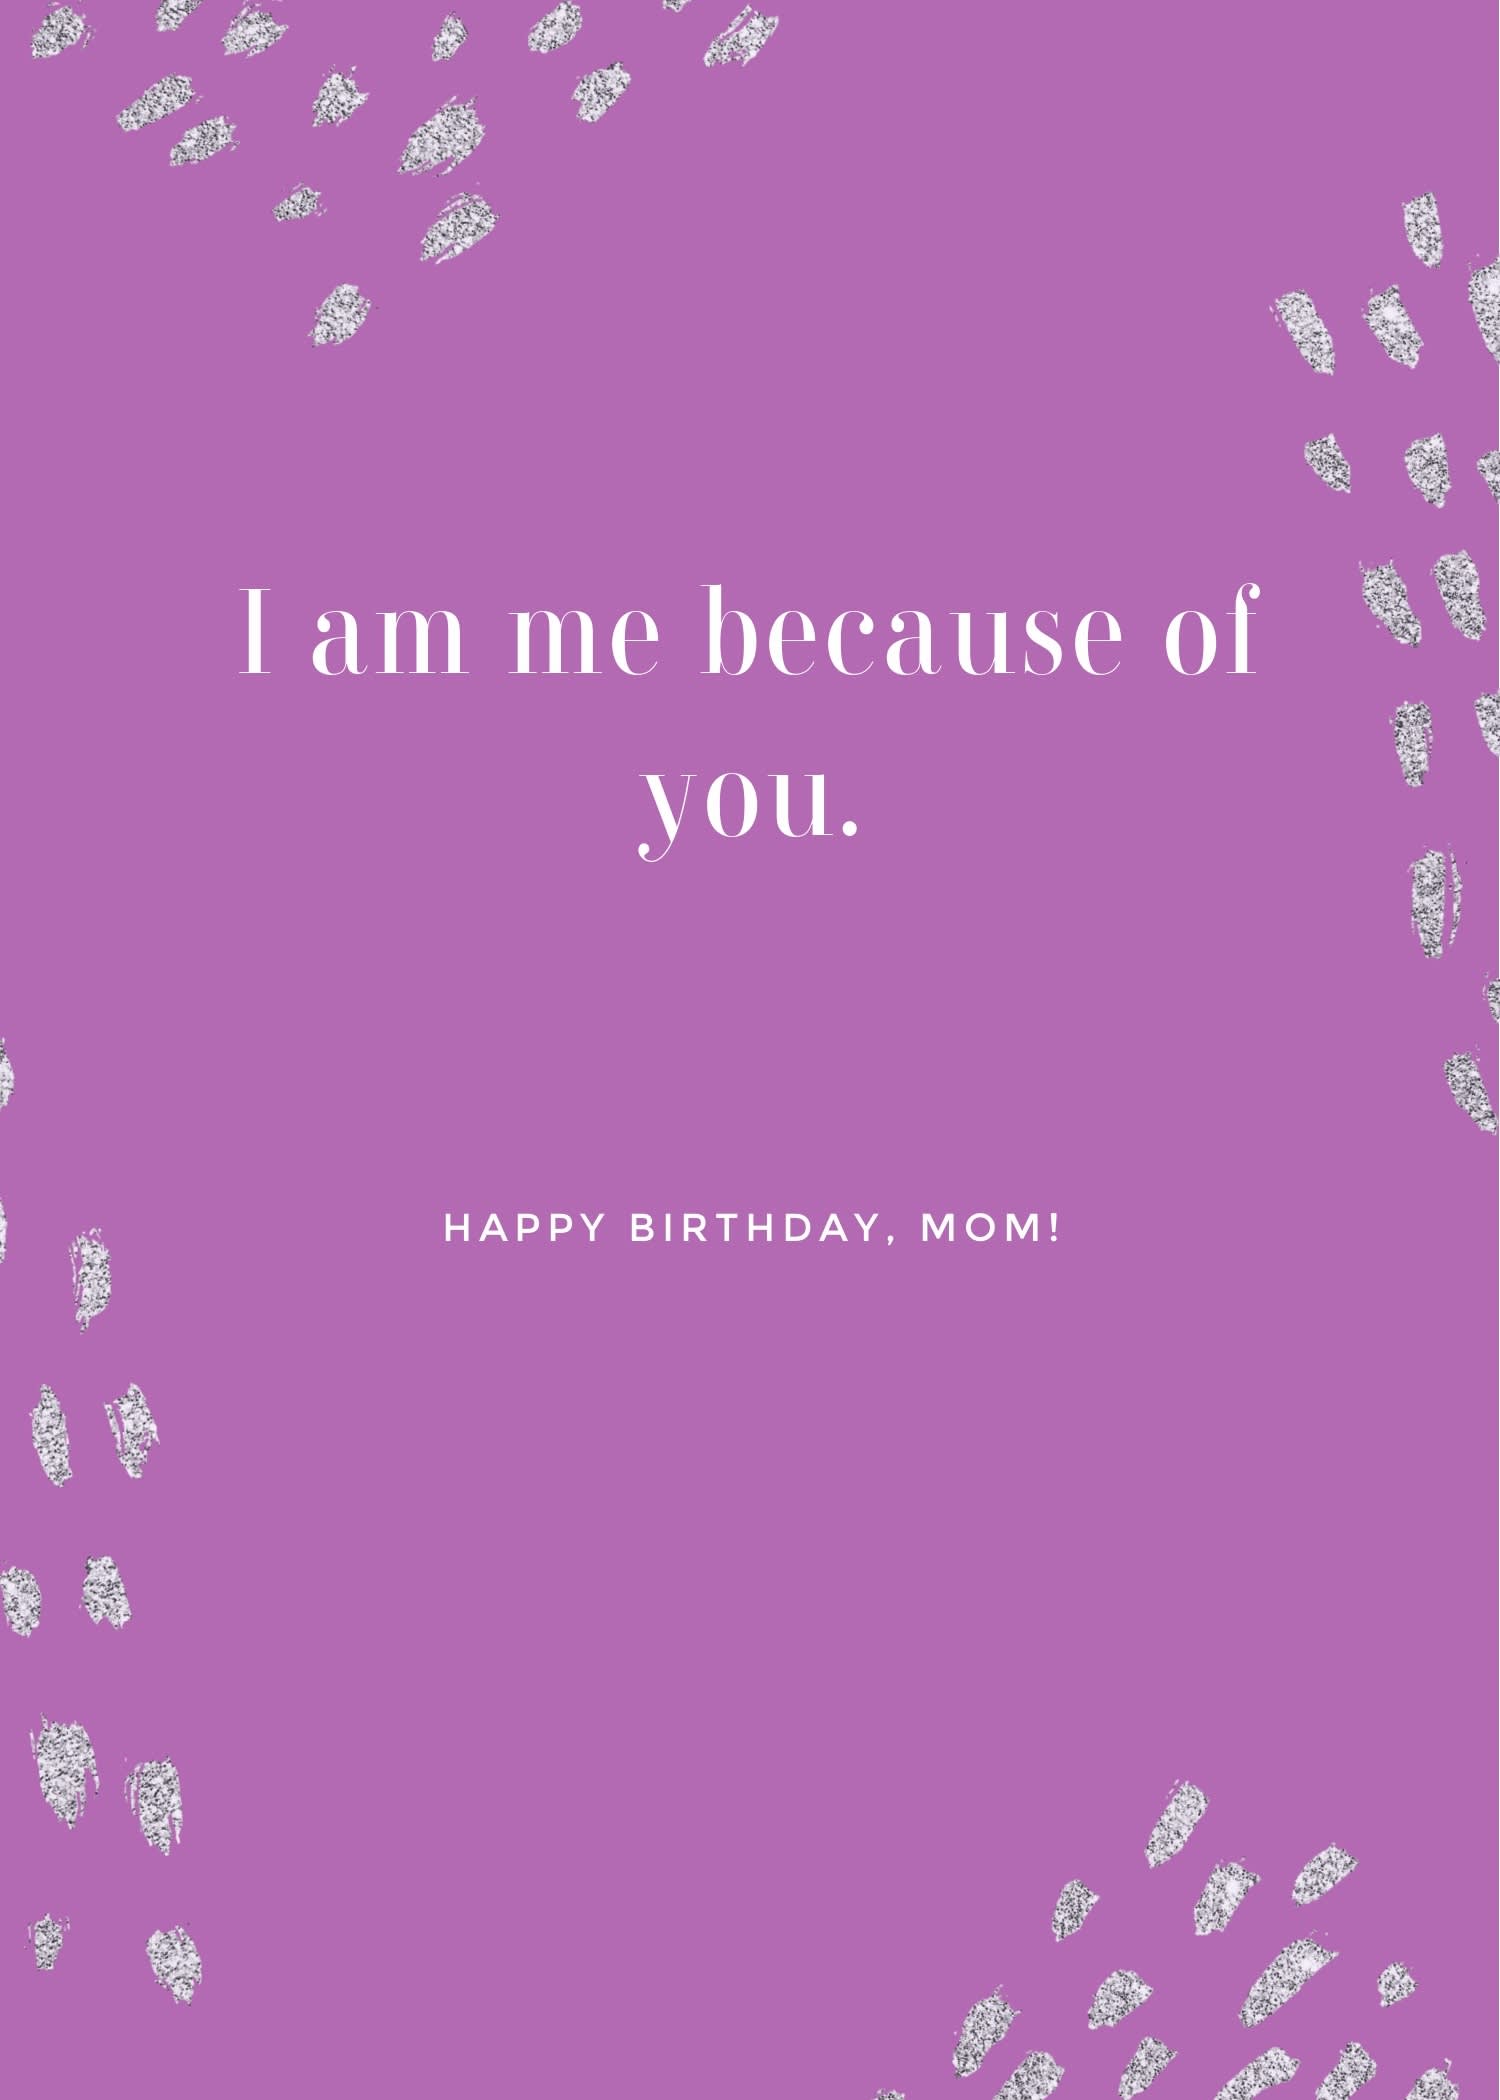 Happy Birthday Mother Greeting Card Vintage Mom Birthday Wishes